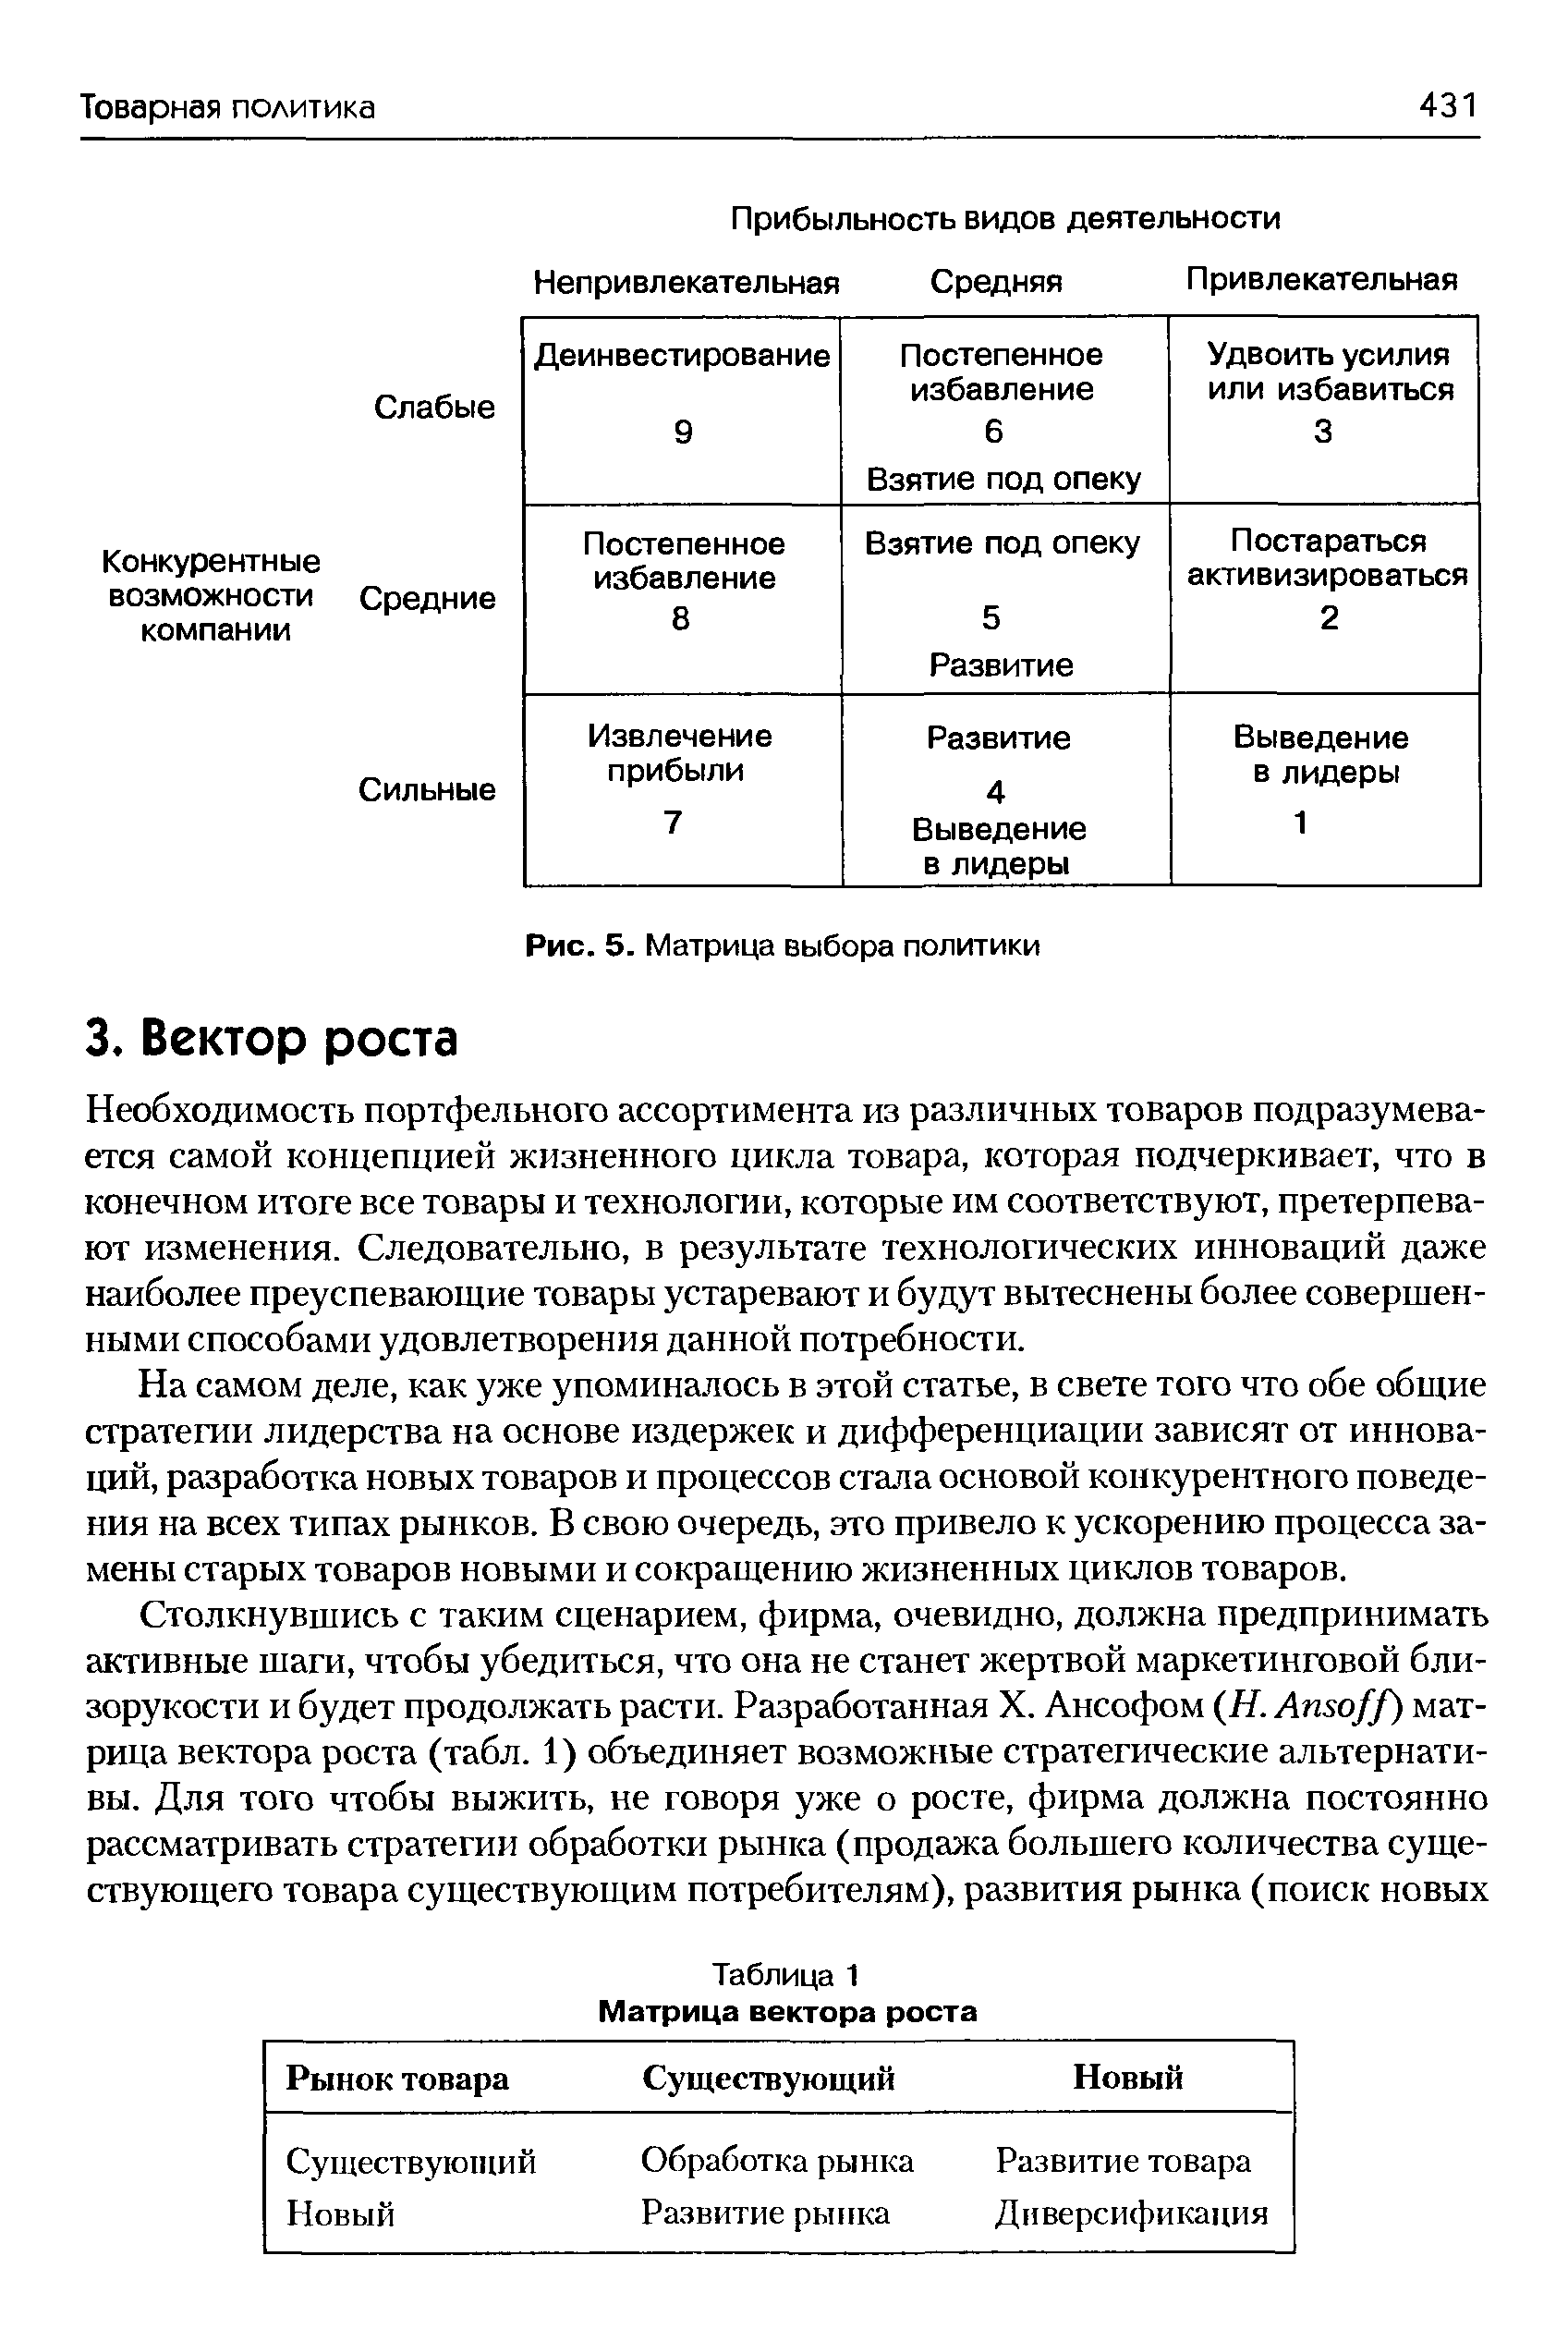 Таблица 1 Матрица вектора роста
